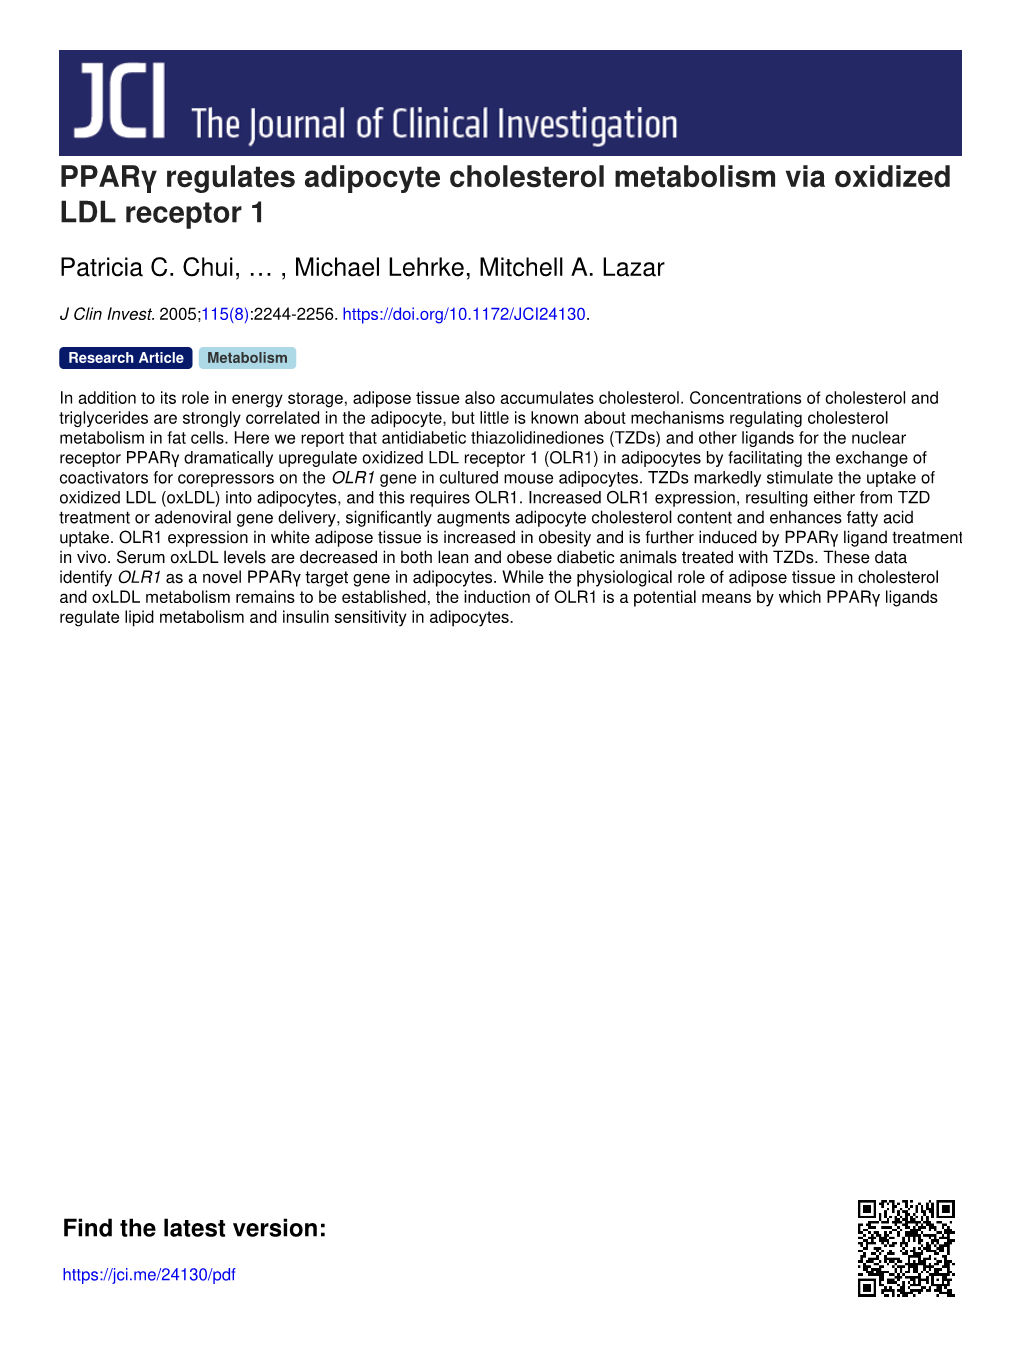 Pparγ Regulates Adipocyte Cholesterol Metabolism Via Oxidized LDL Receptor 1